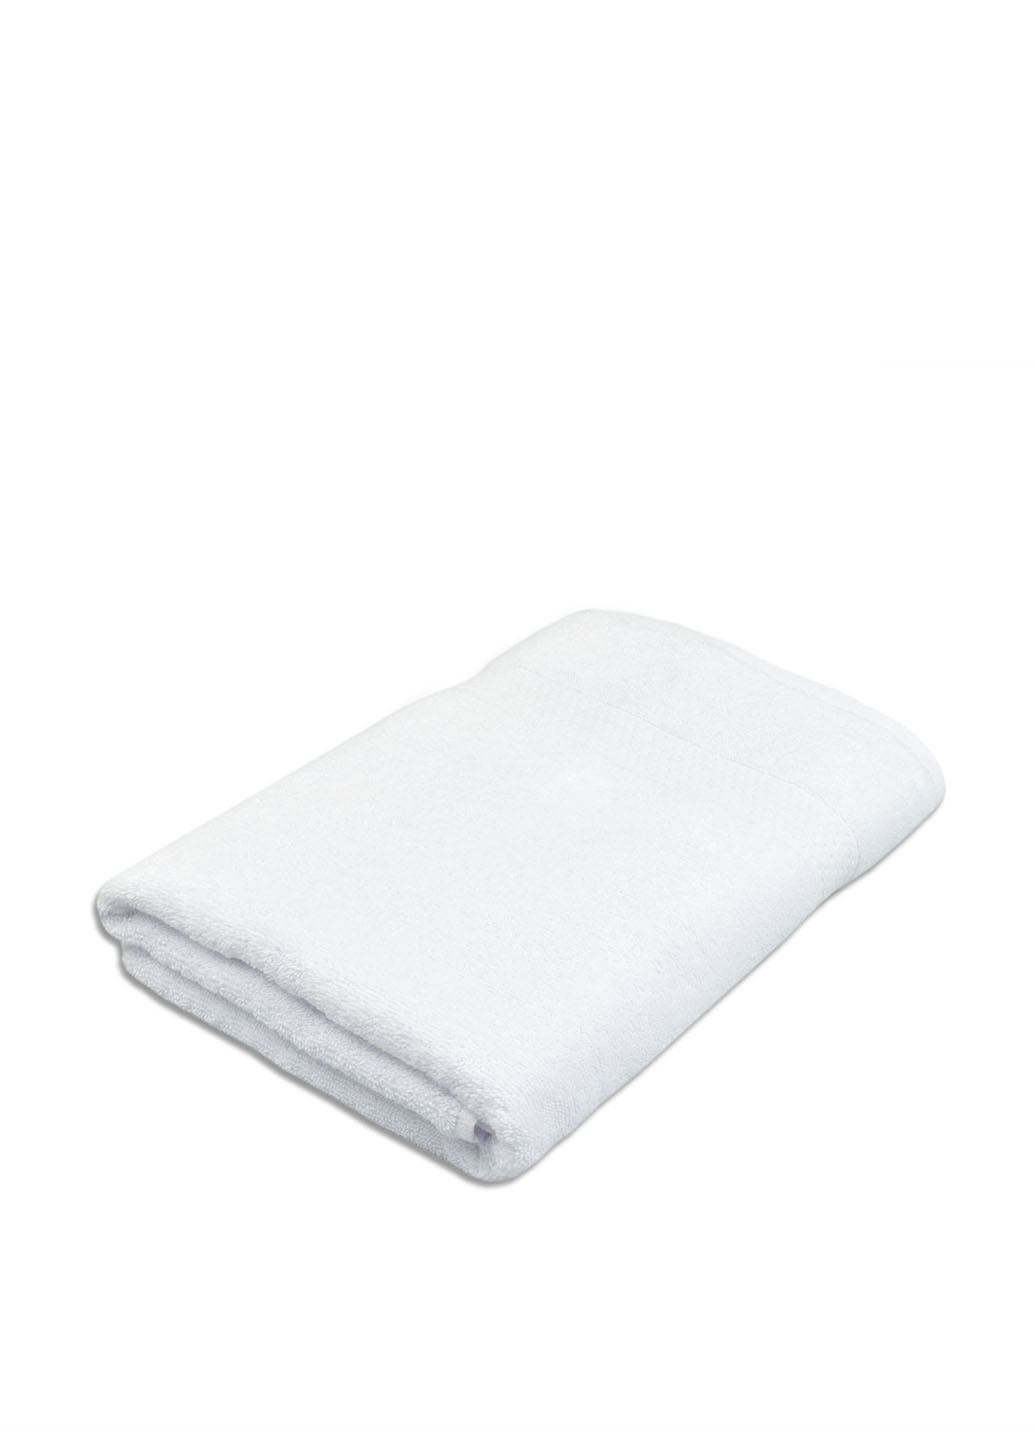 Home Line полотенце, 50х90 см однотонный белый производство - Турция